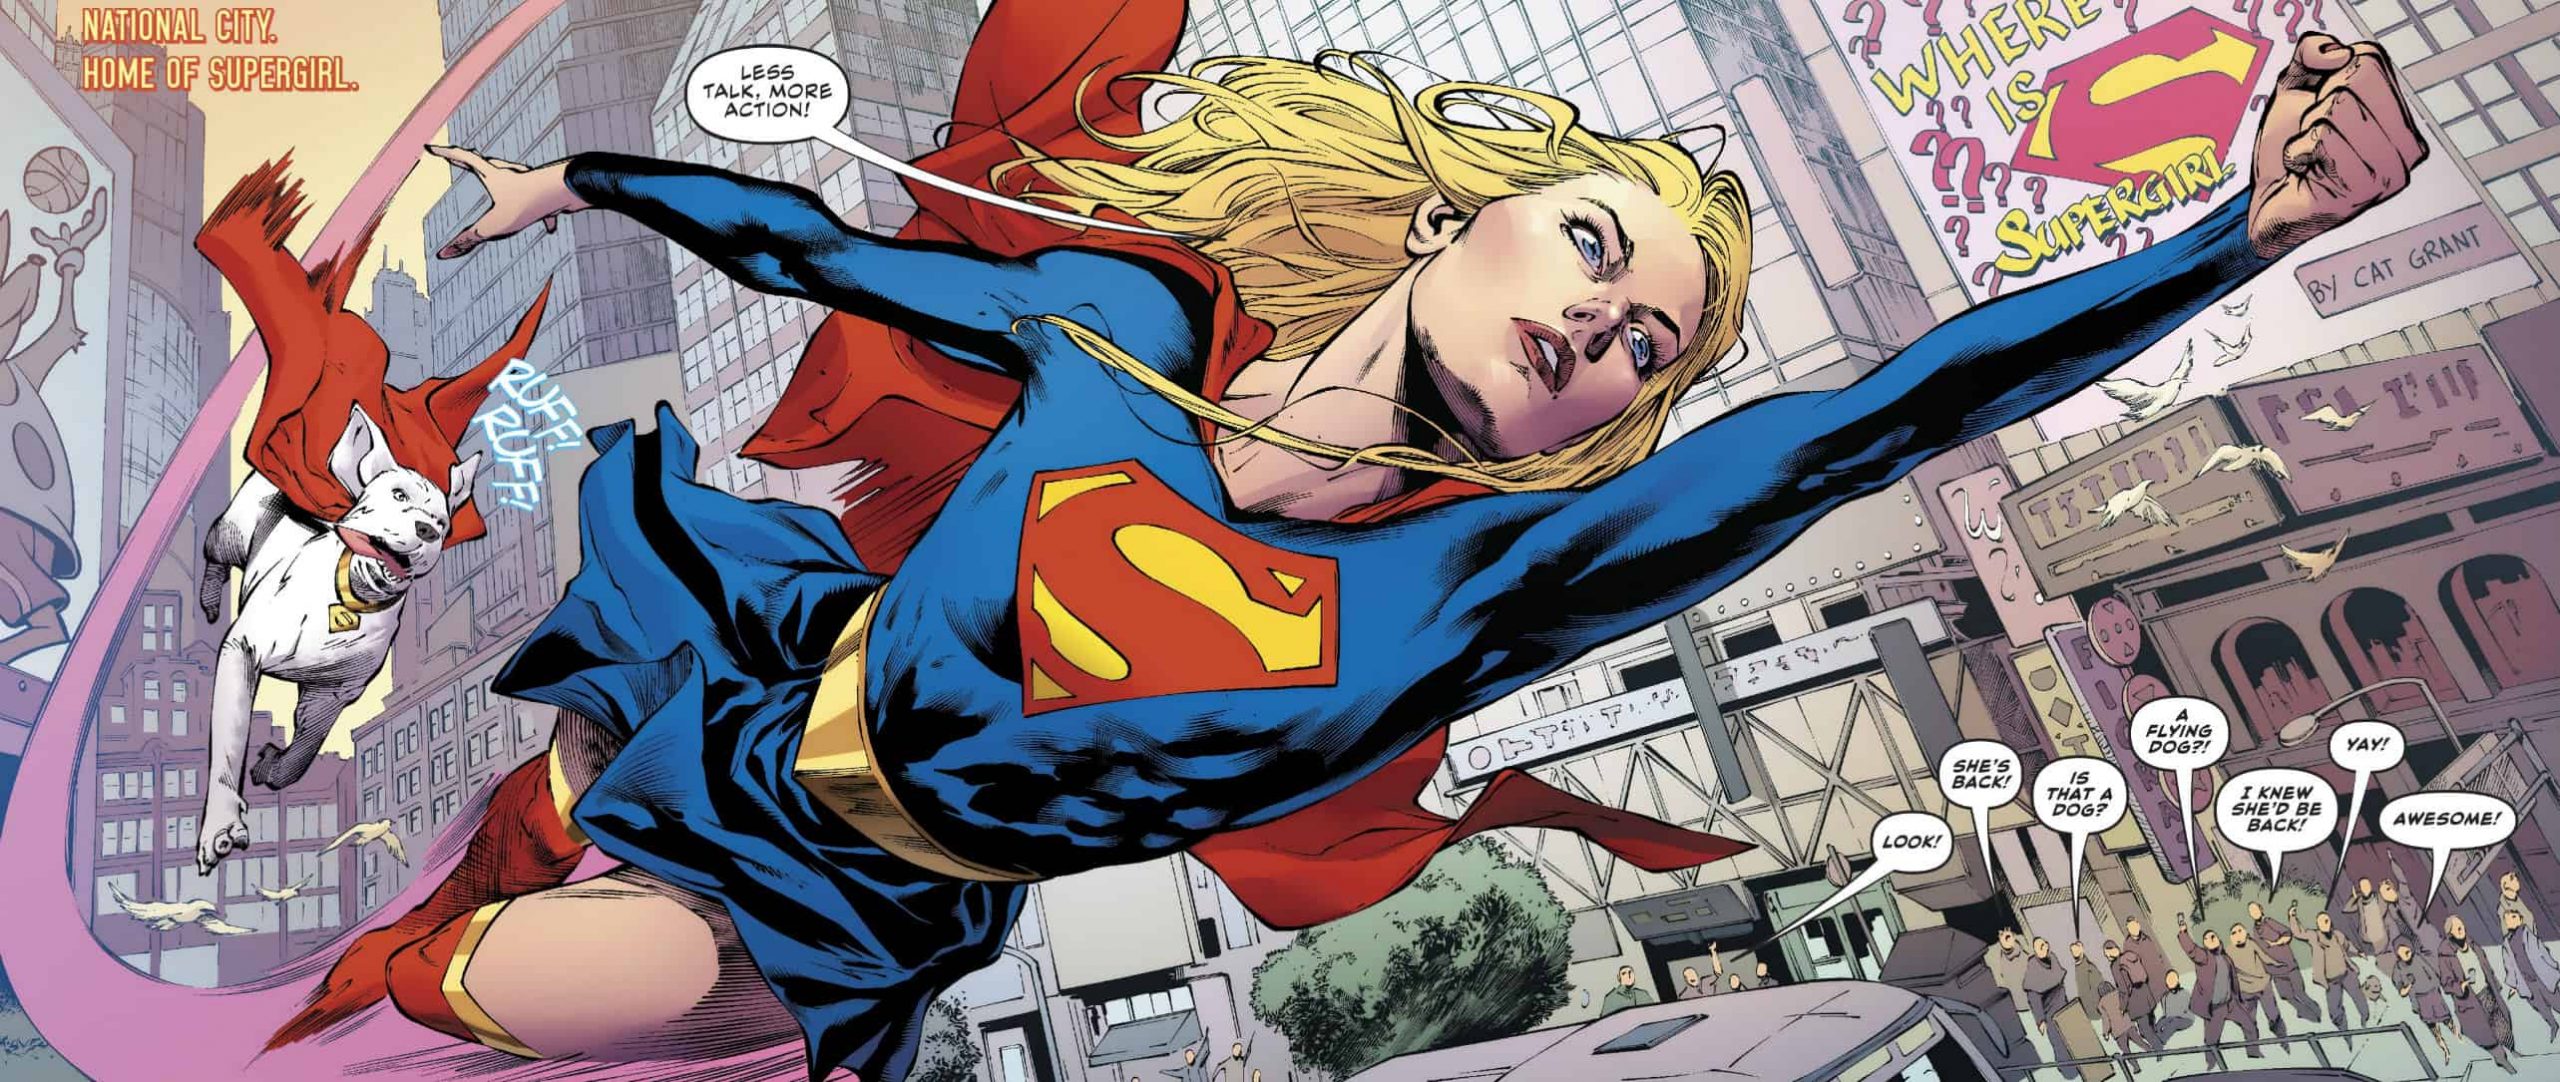 Supergirl scaled